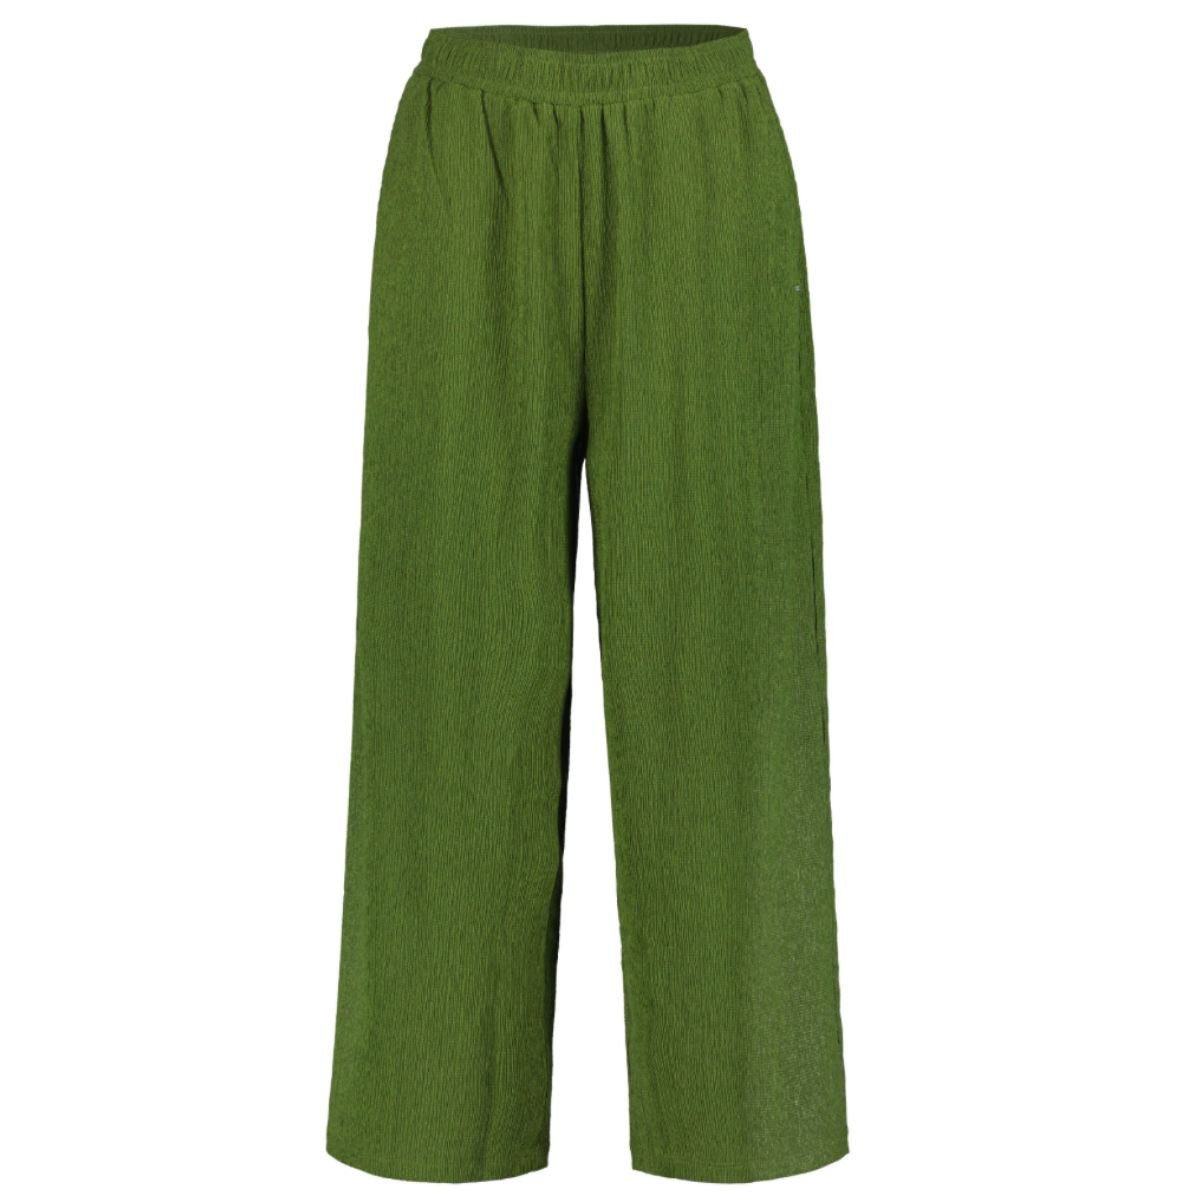 Nohavice Luhta Haiko W - zelené